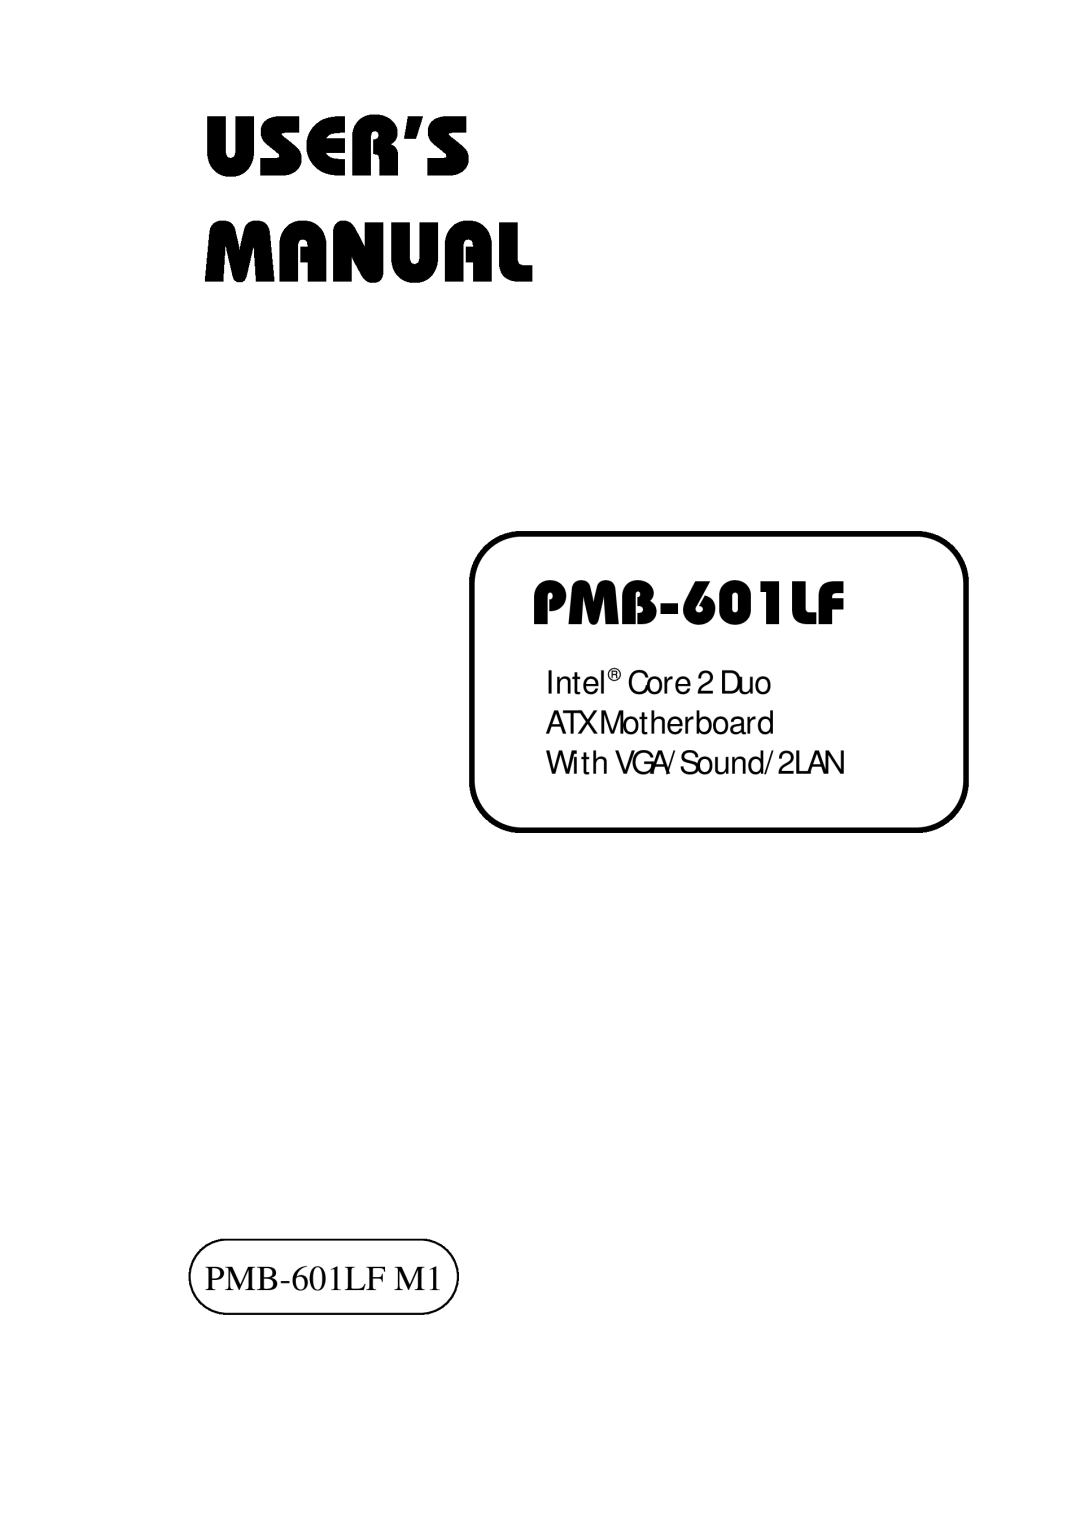 Intel user manual User’S Manual, PMB-601LFM1, Intel Core 2 Duo ATX Motherboard, With VGA/Sound/2LAN 